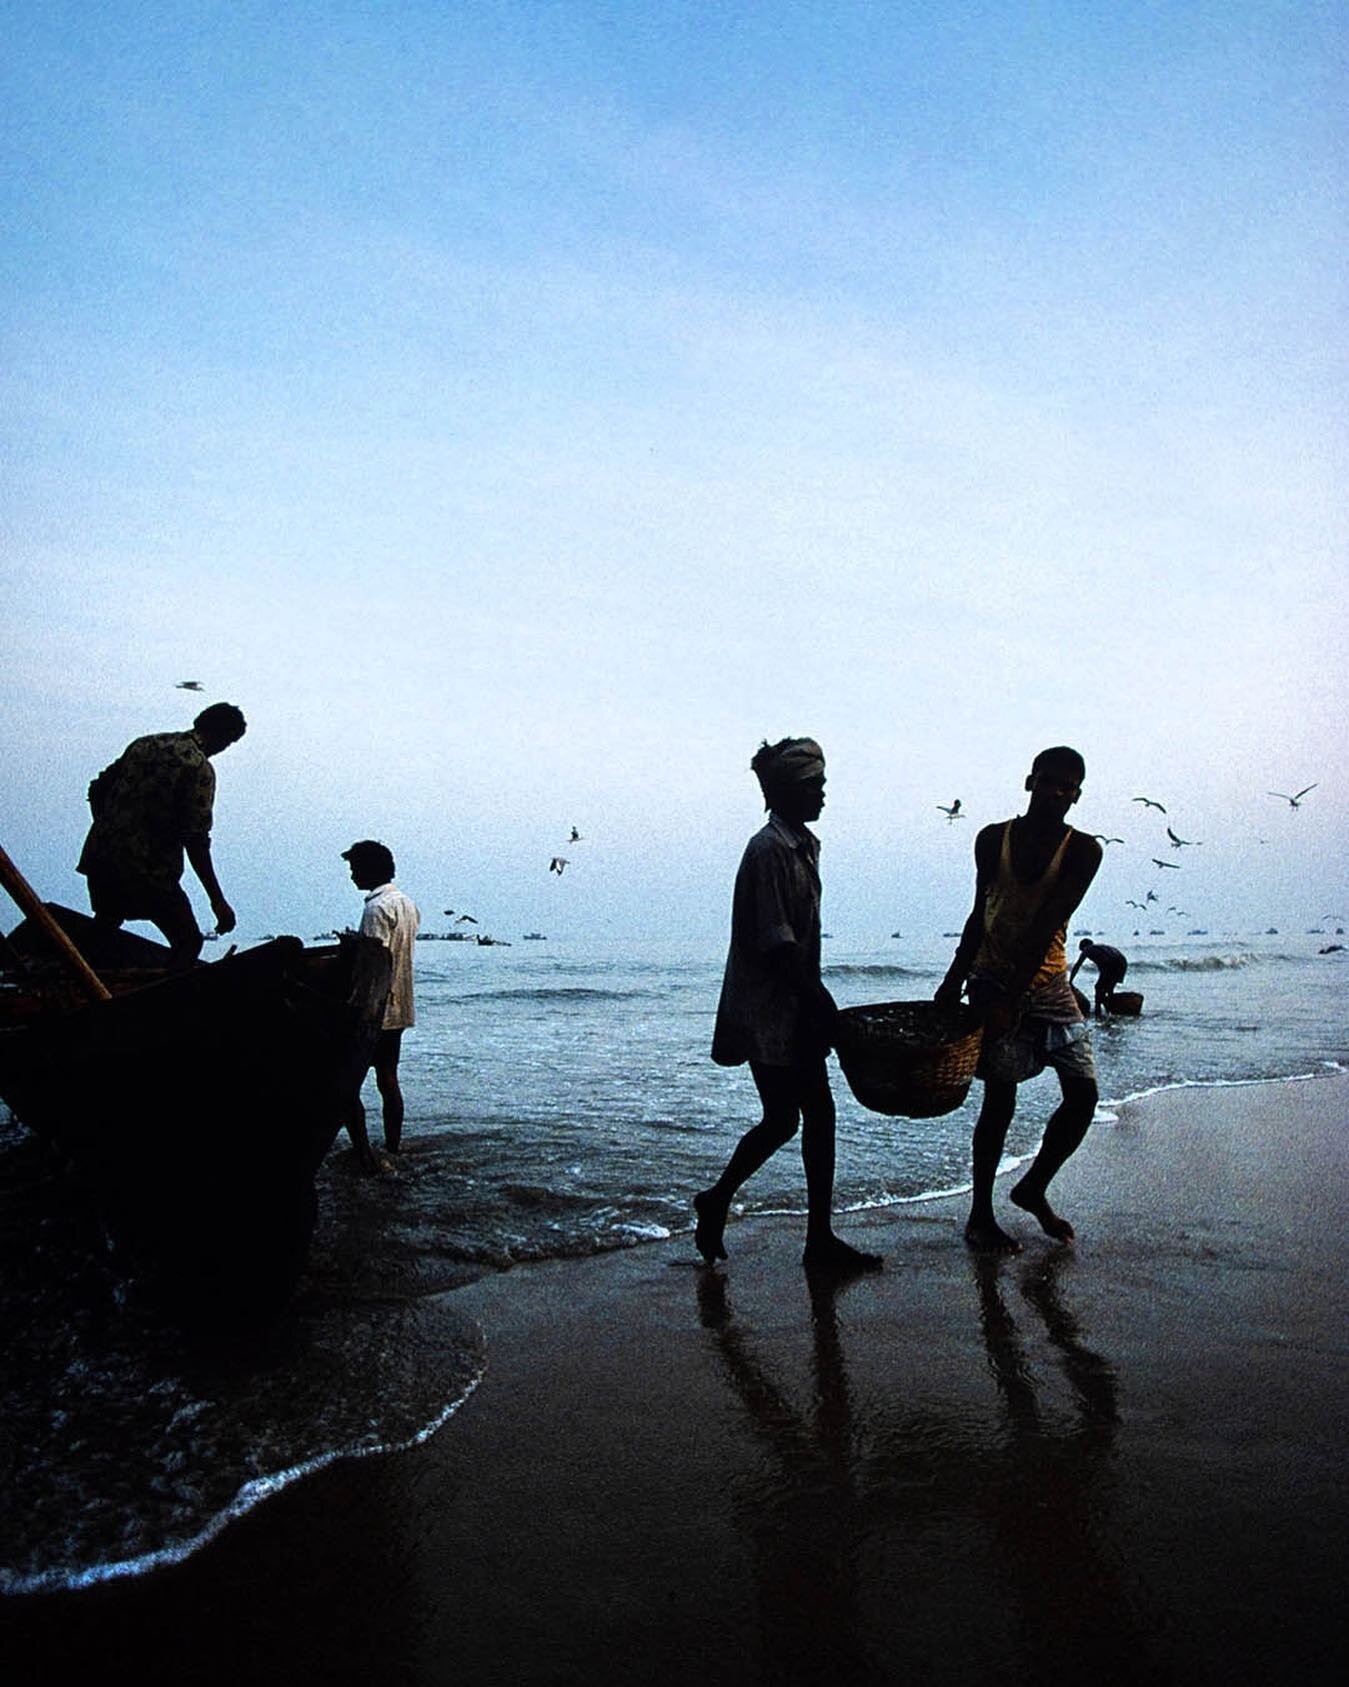 Colva, India, 2000. ⁠
⁠
⁠
#fisherman #fishing #beach #goa #india #travel #kodachrome #fromthearchive #jwbild #magichour #bluehour